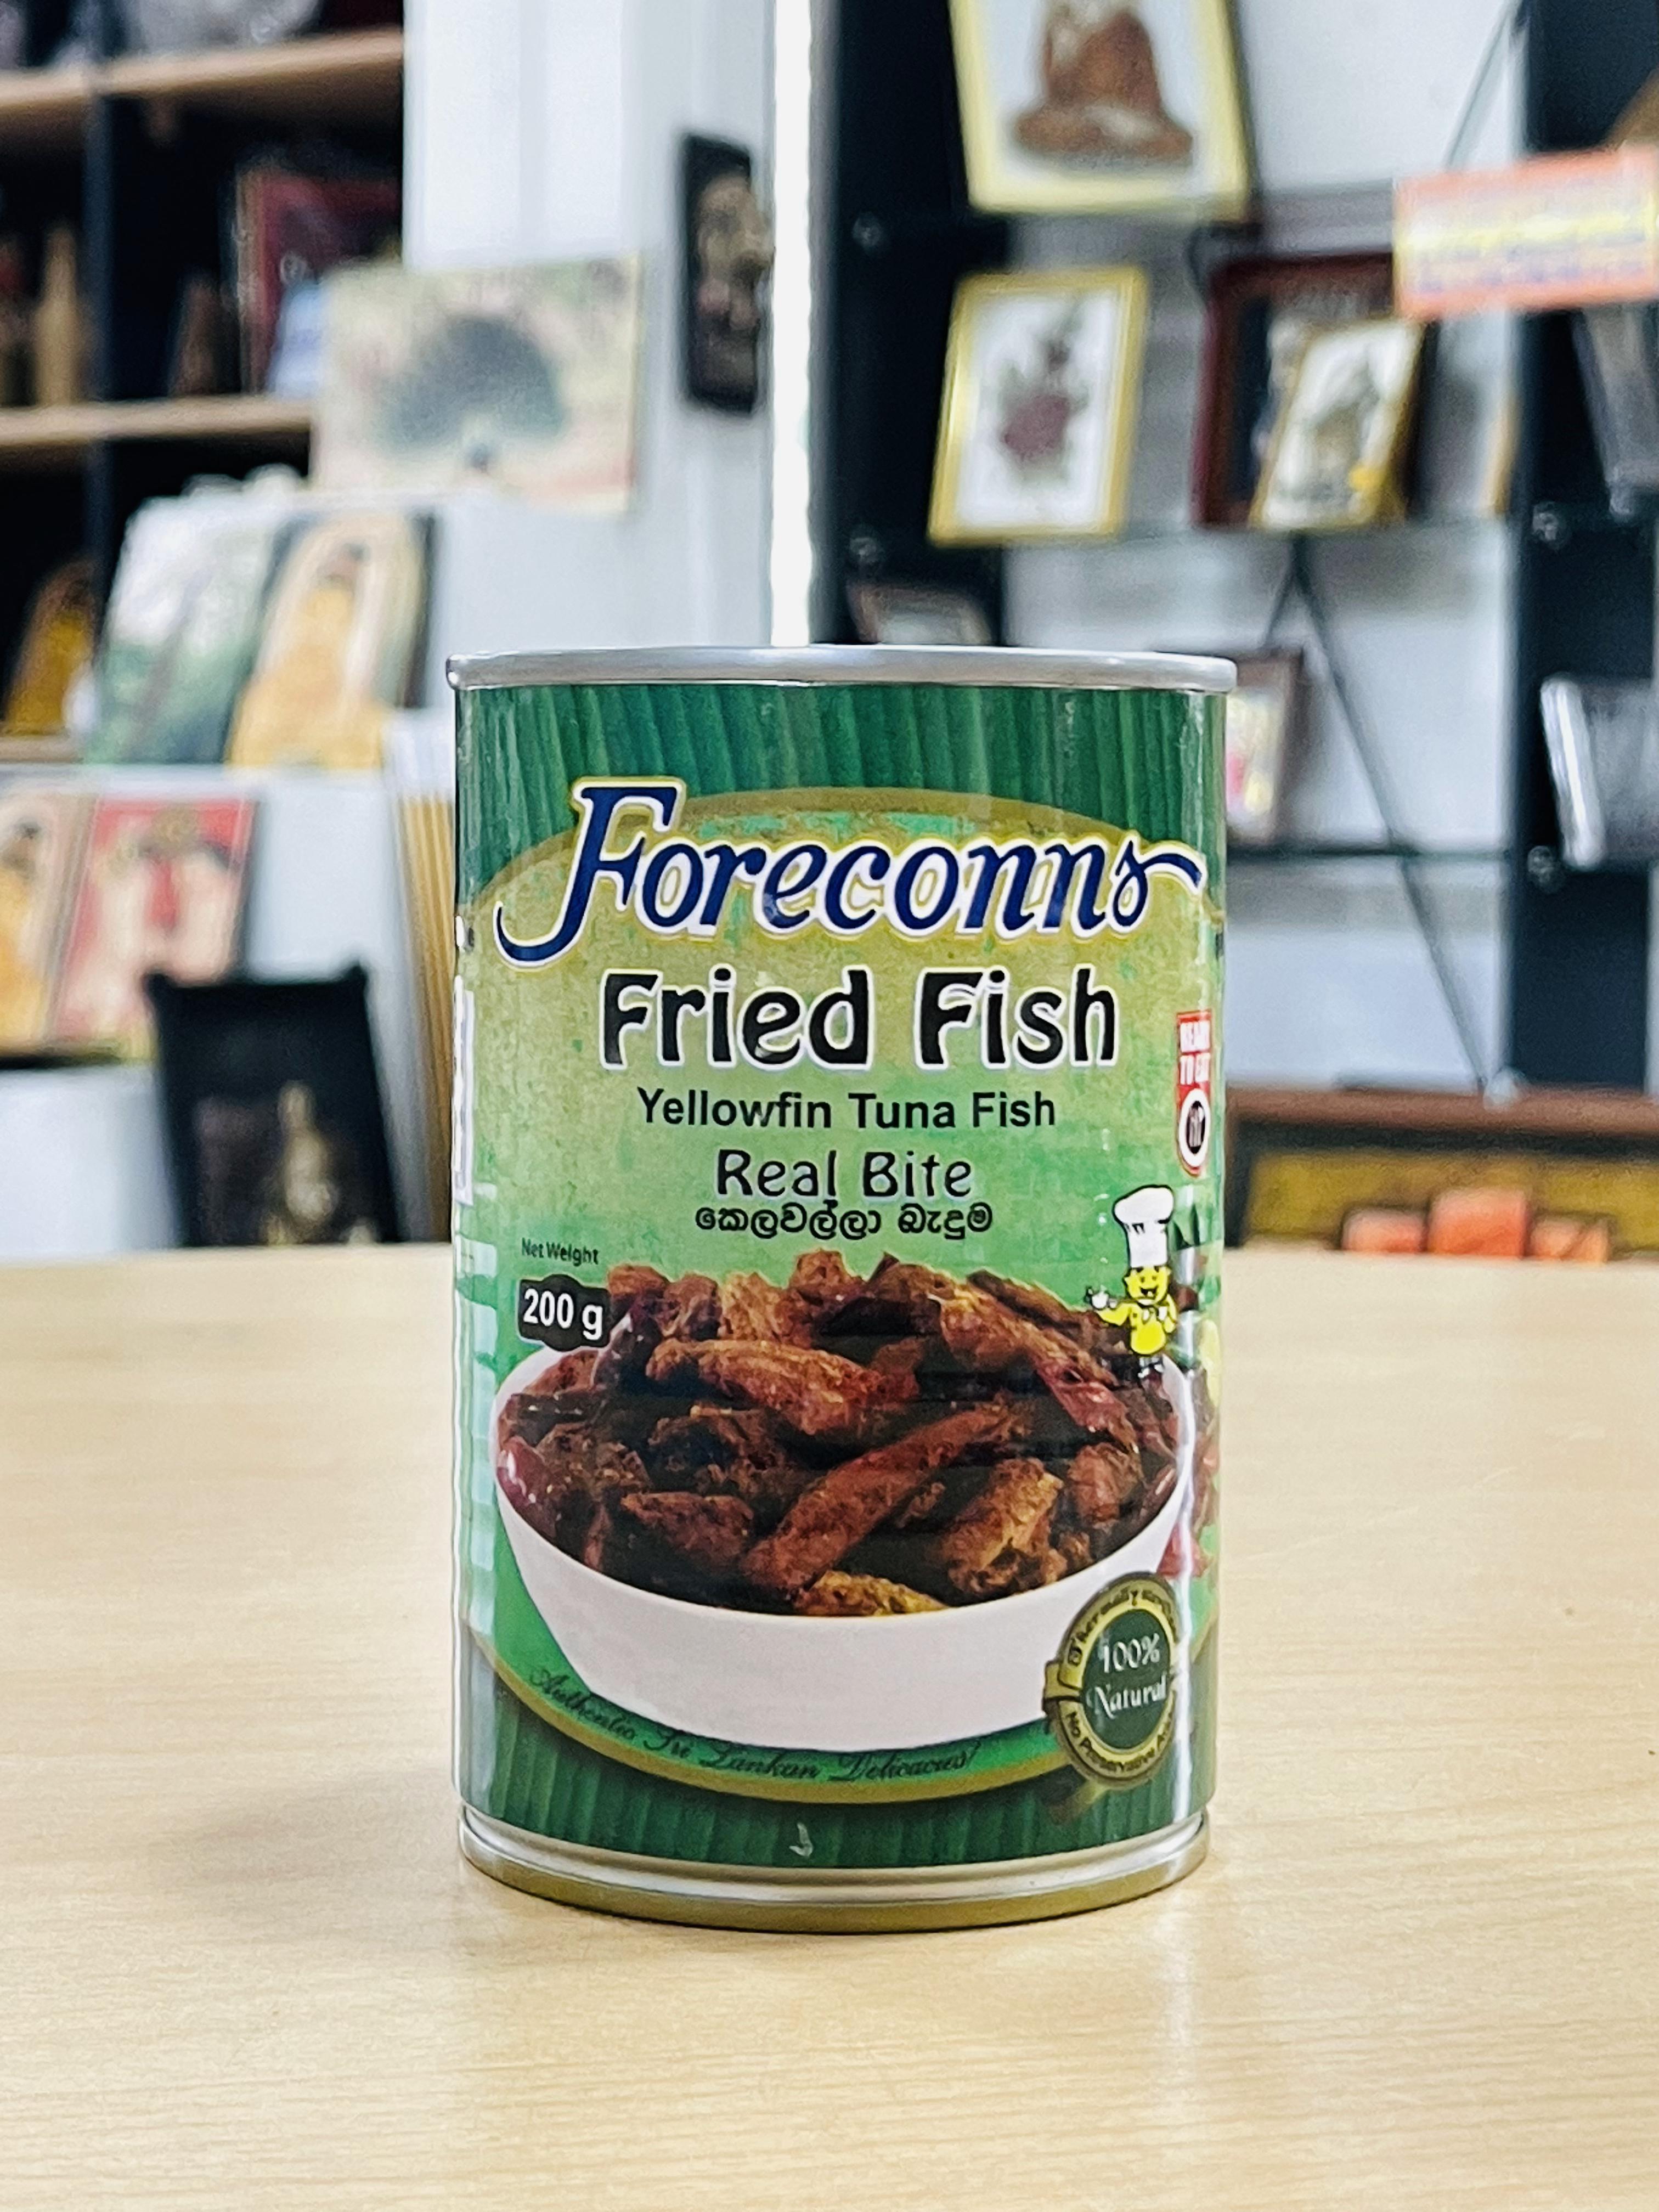 Foreconns Canned Yellofin Tuna Fish